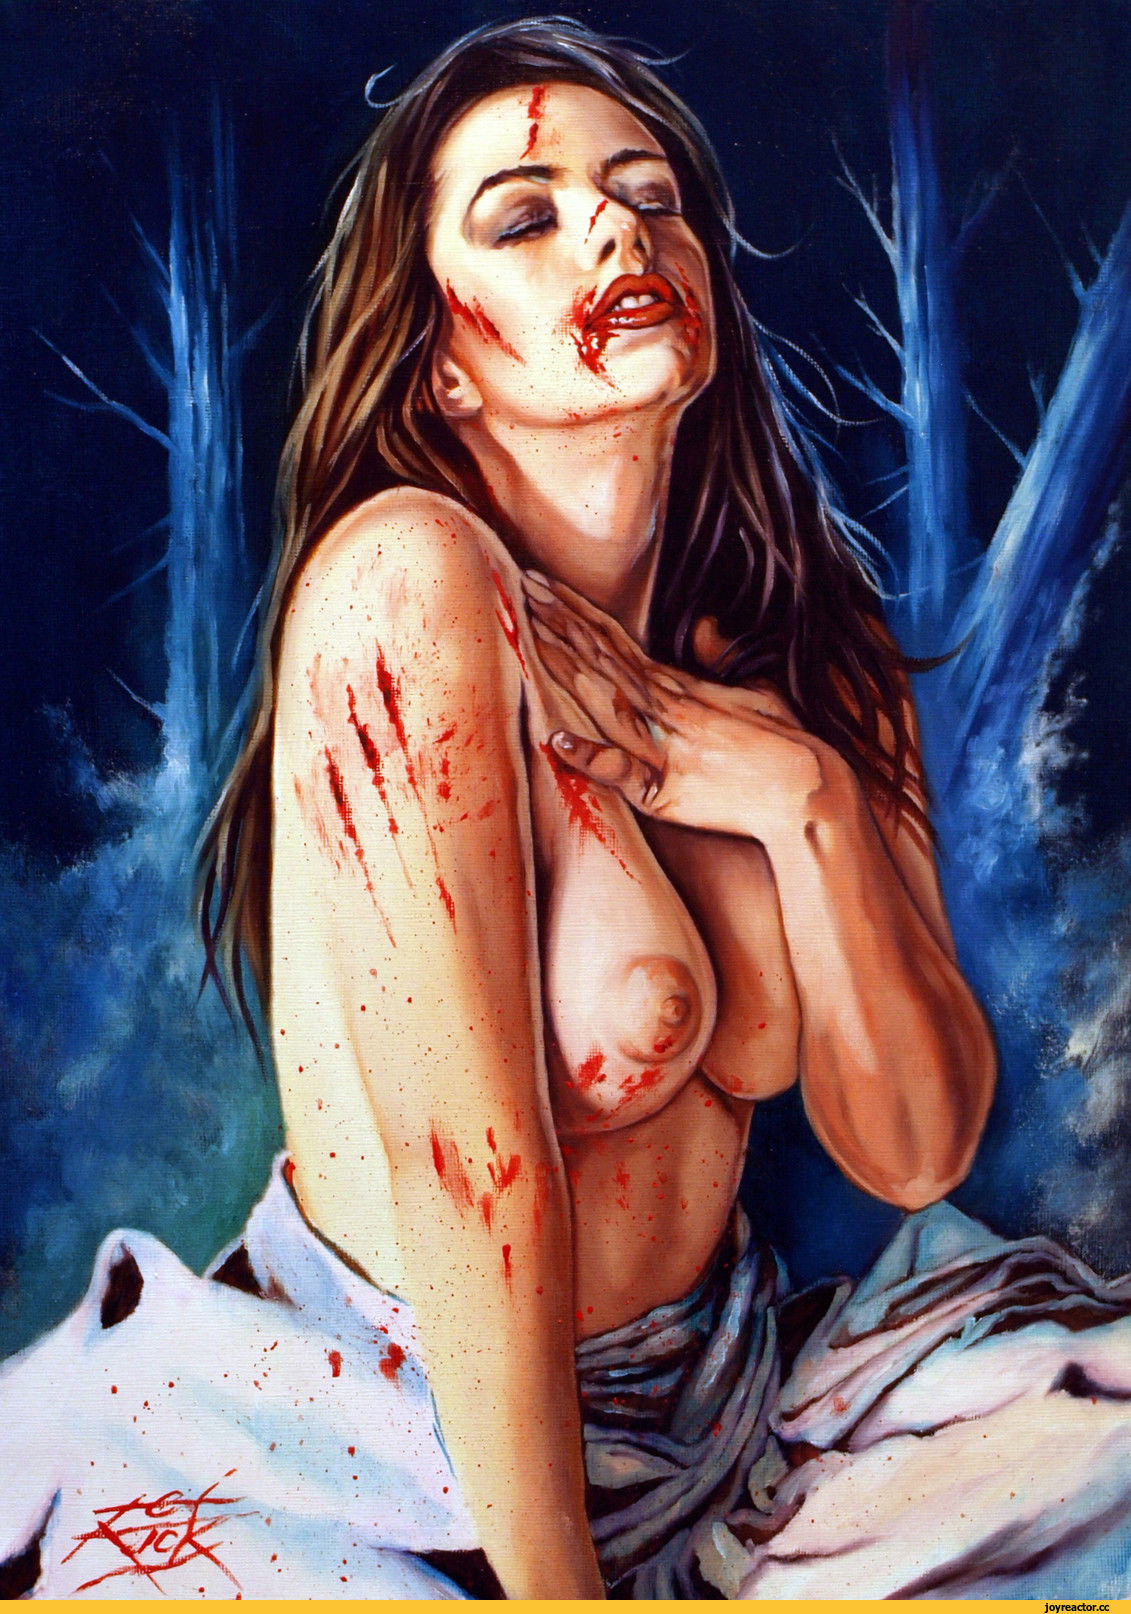 Erotic horror art